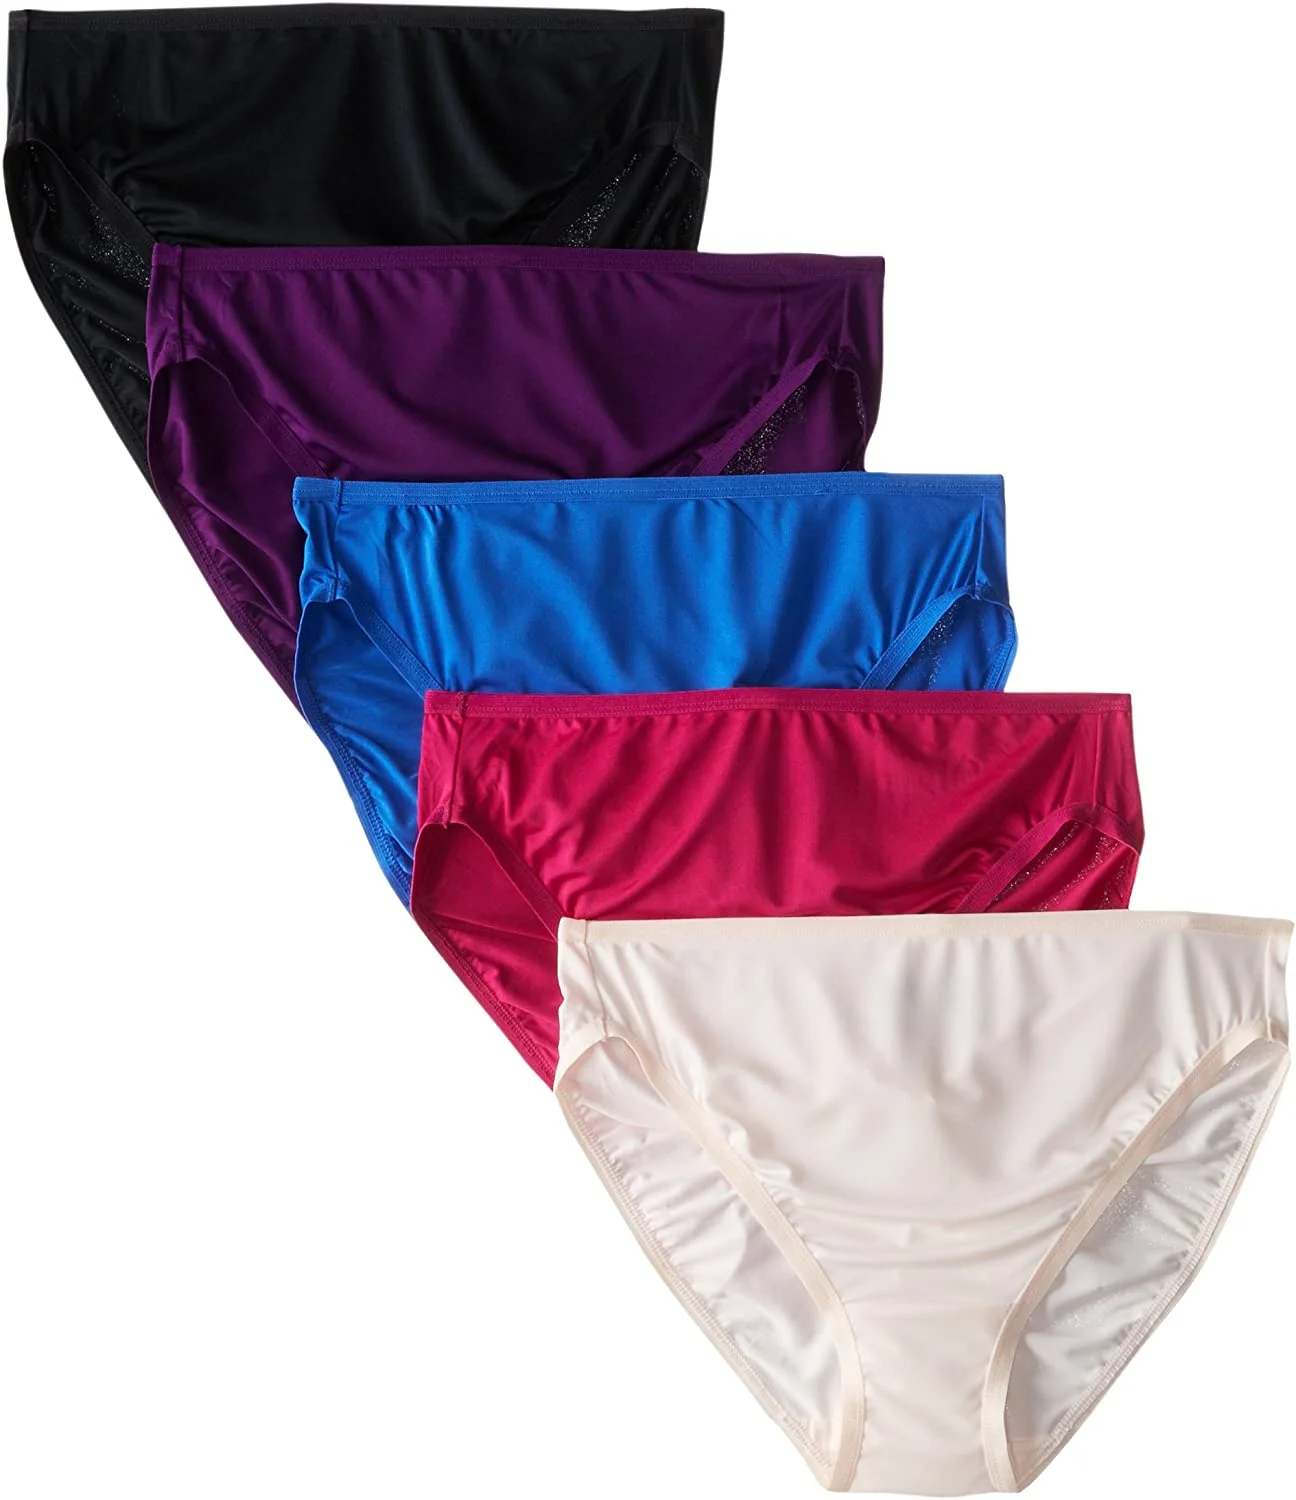 Women's Microfiber Hi Cut Panties from Bangladesh Underwear Factory